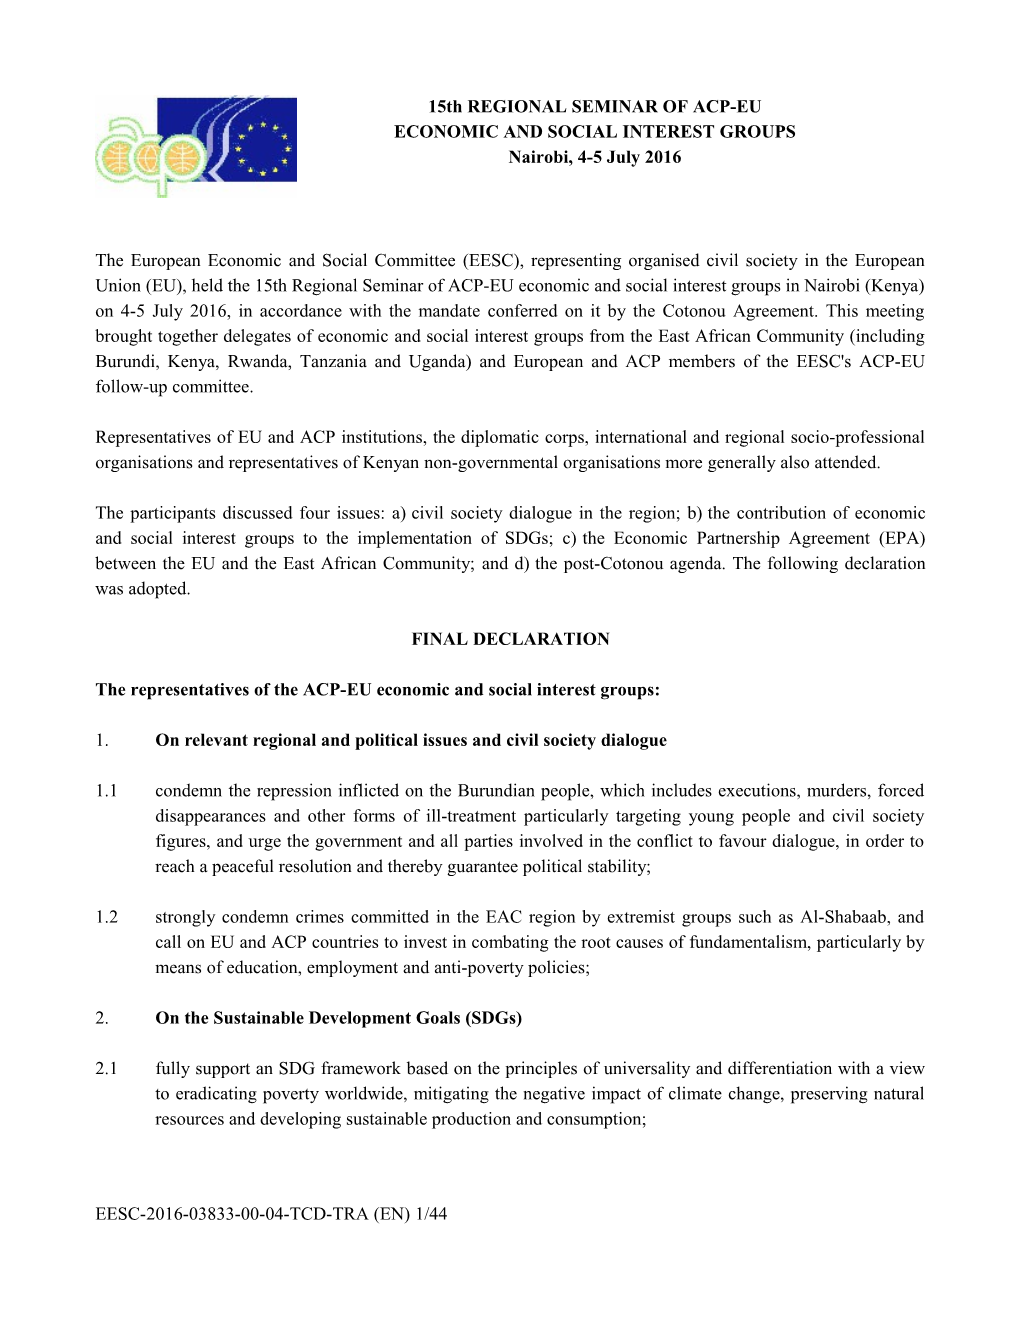 Final Declaration - 15Th Meeting of the ACP-EU Regional Seminar 4-5 July Nairobi